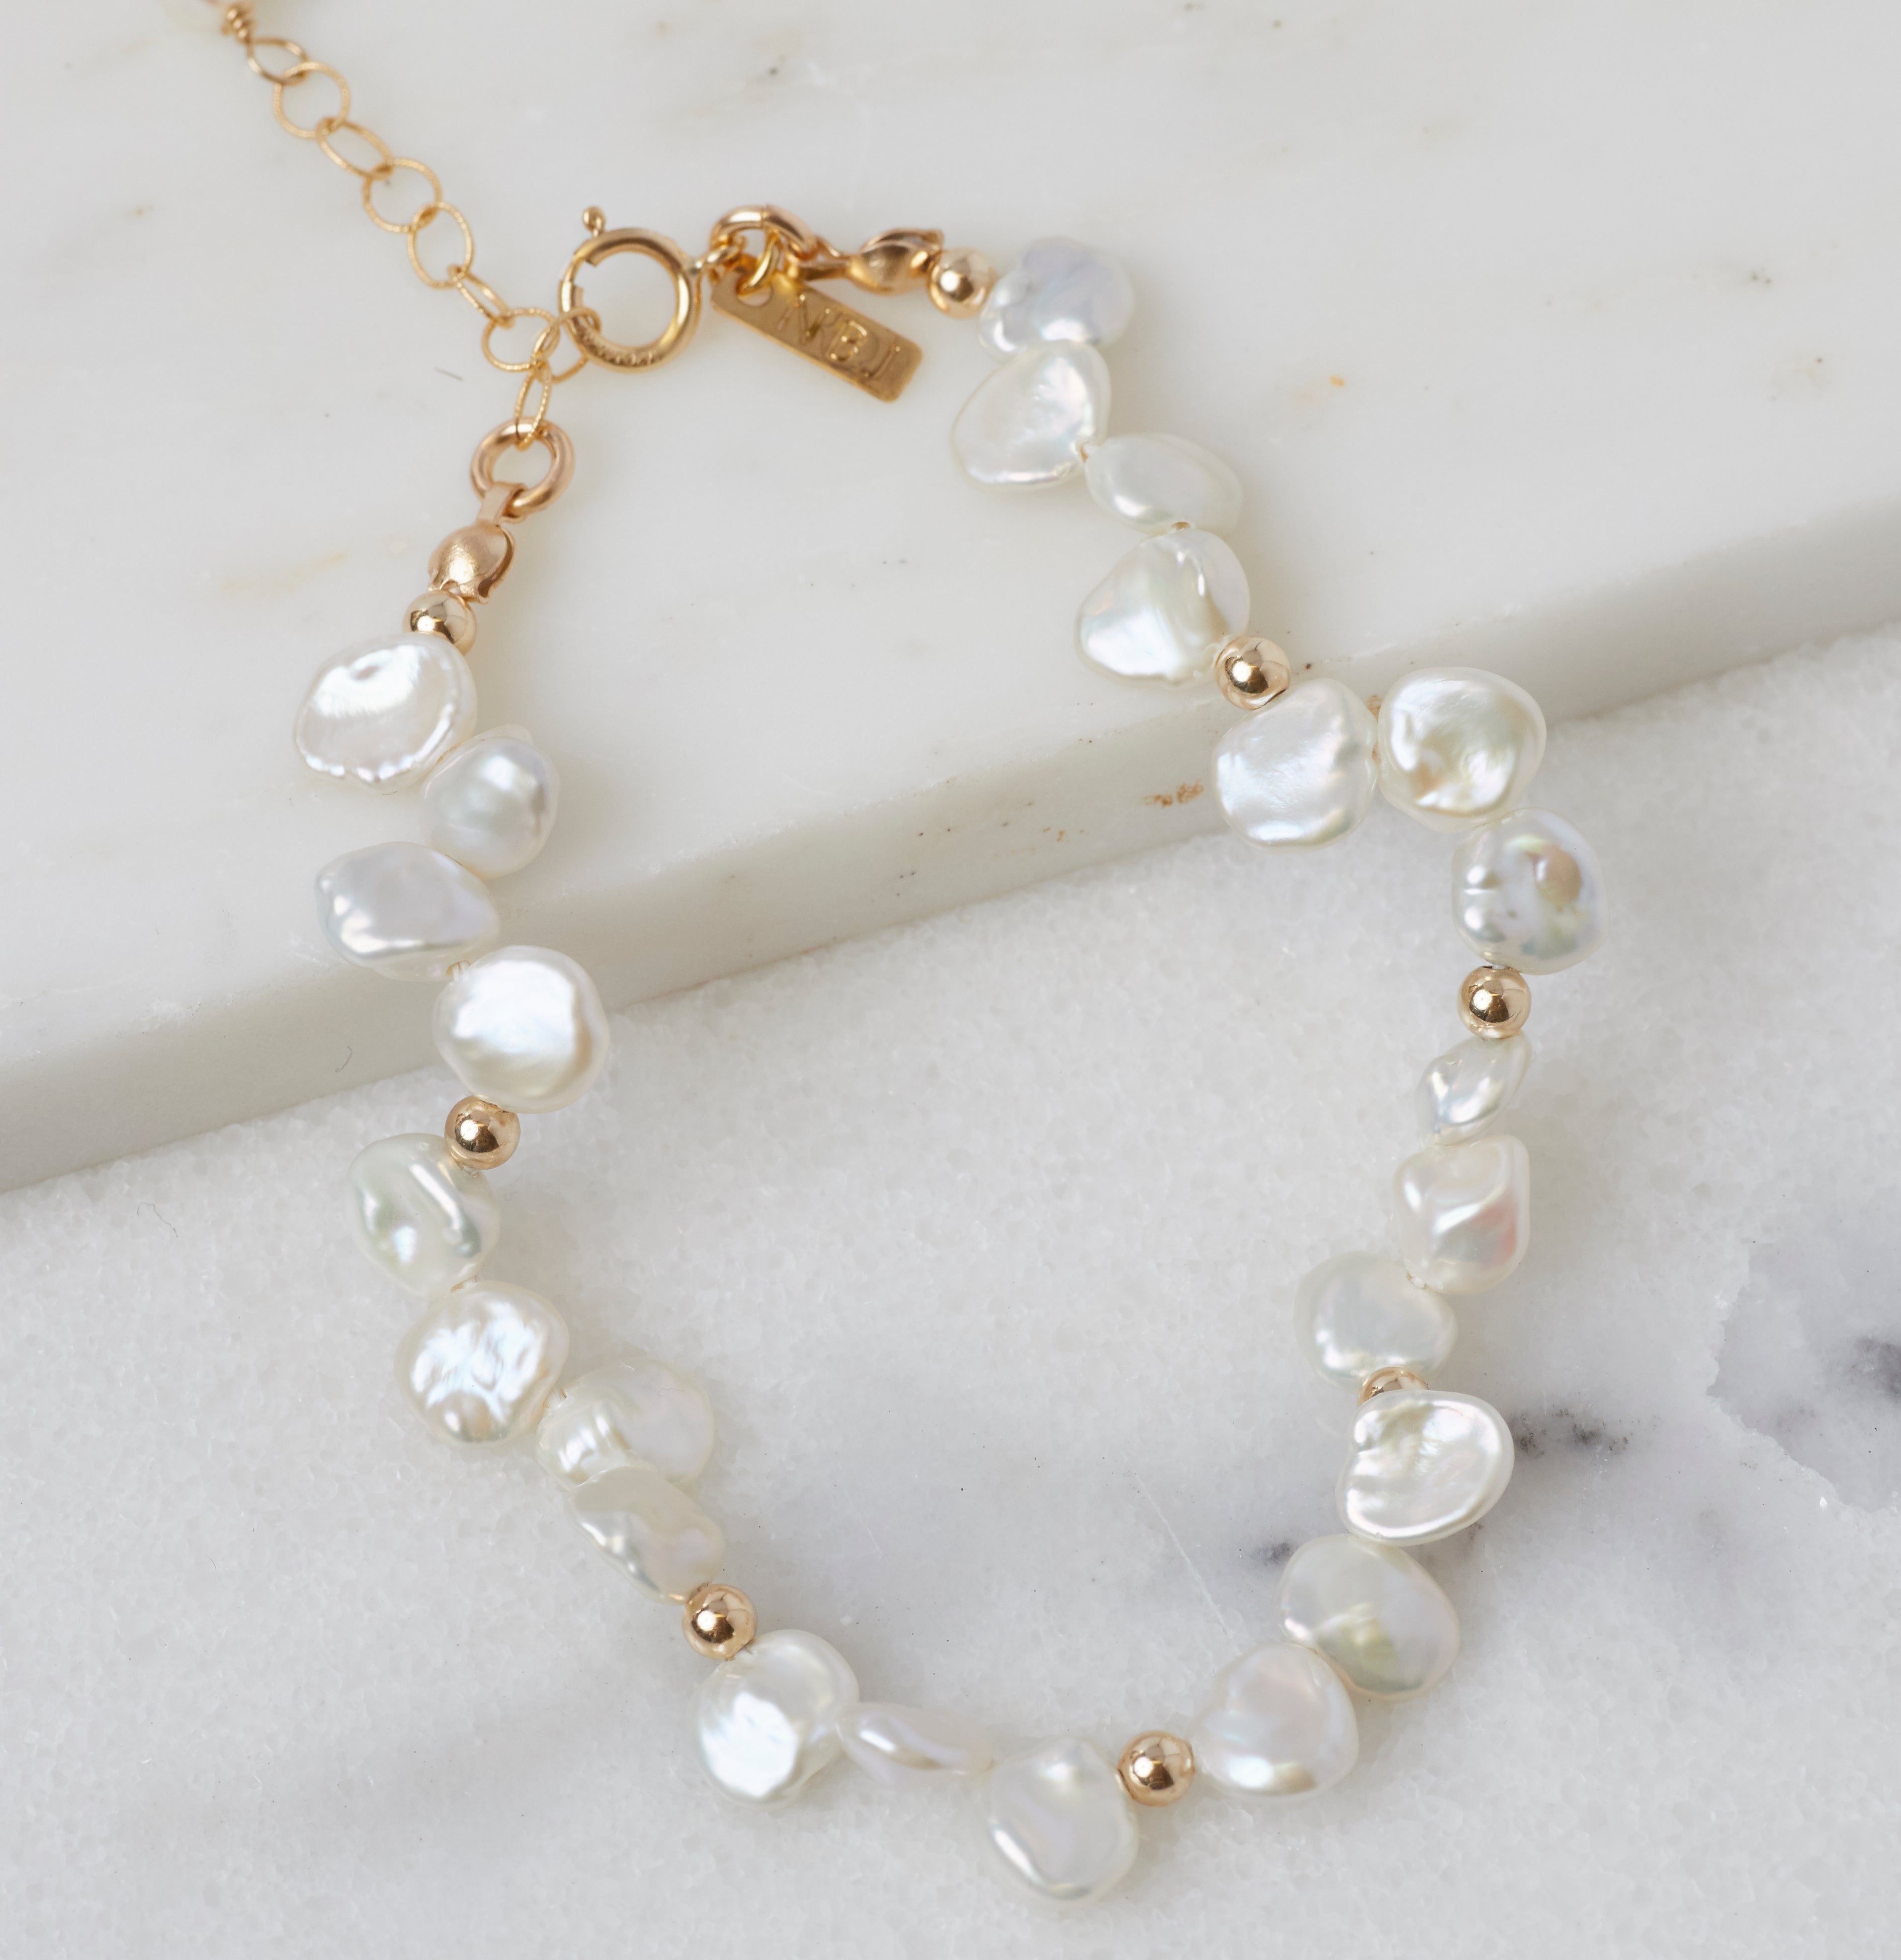 Le Perla Bracelet – Natalie B. Jewelry